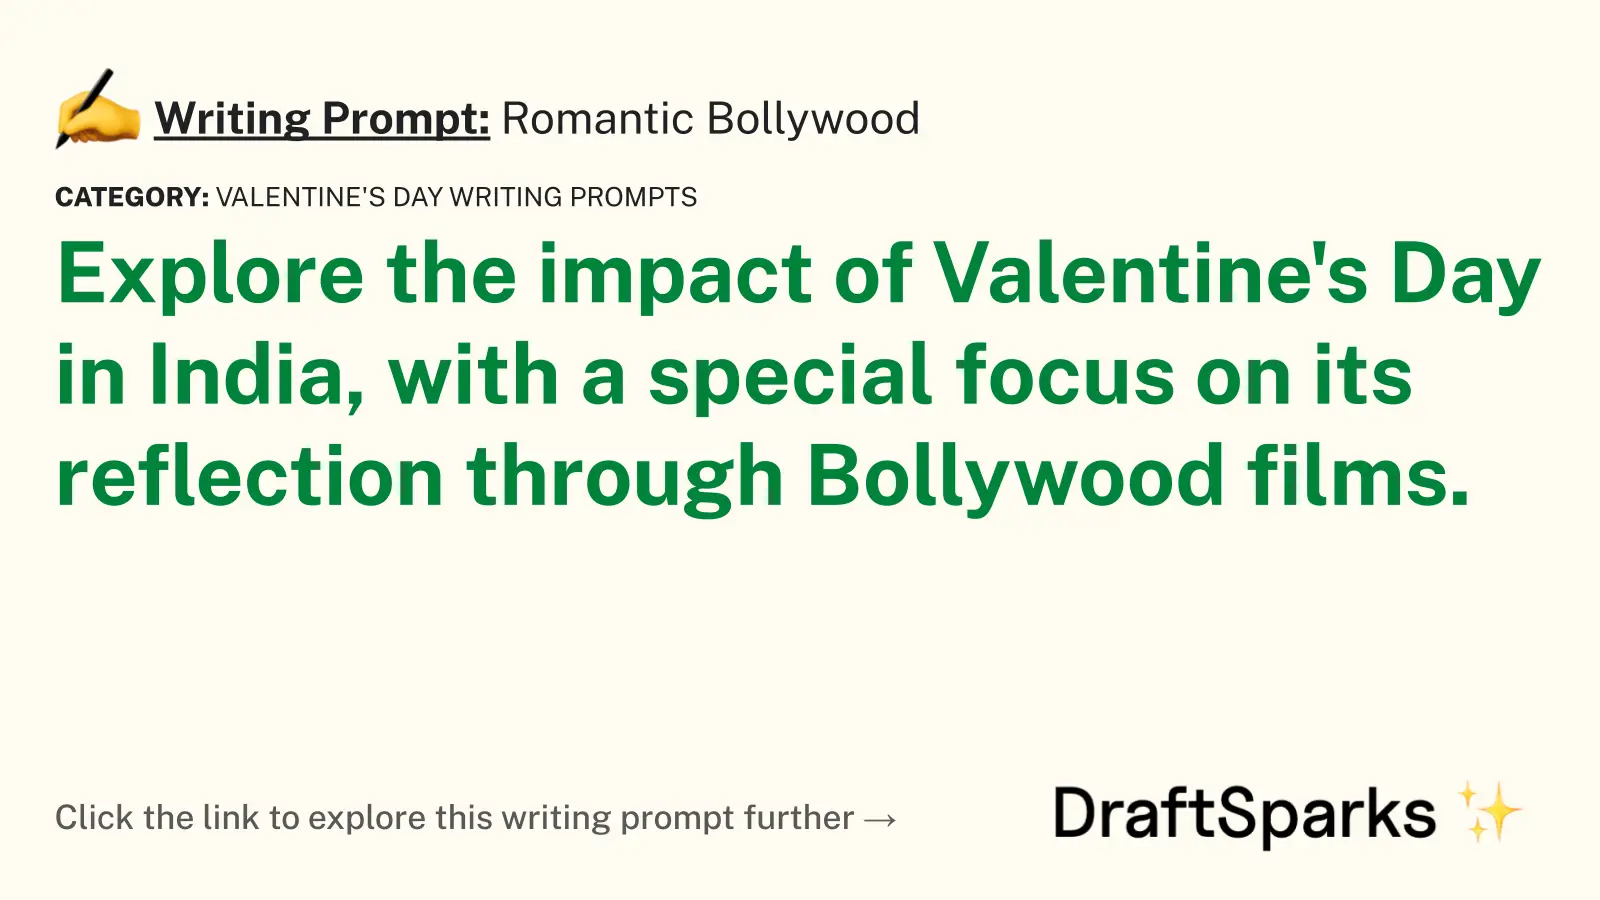 Romantic Bollywood